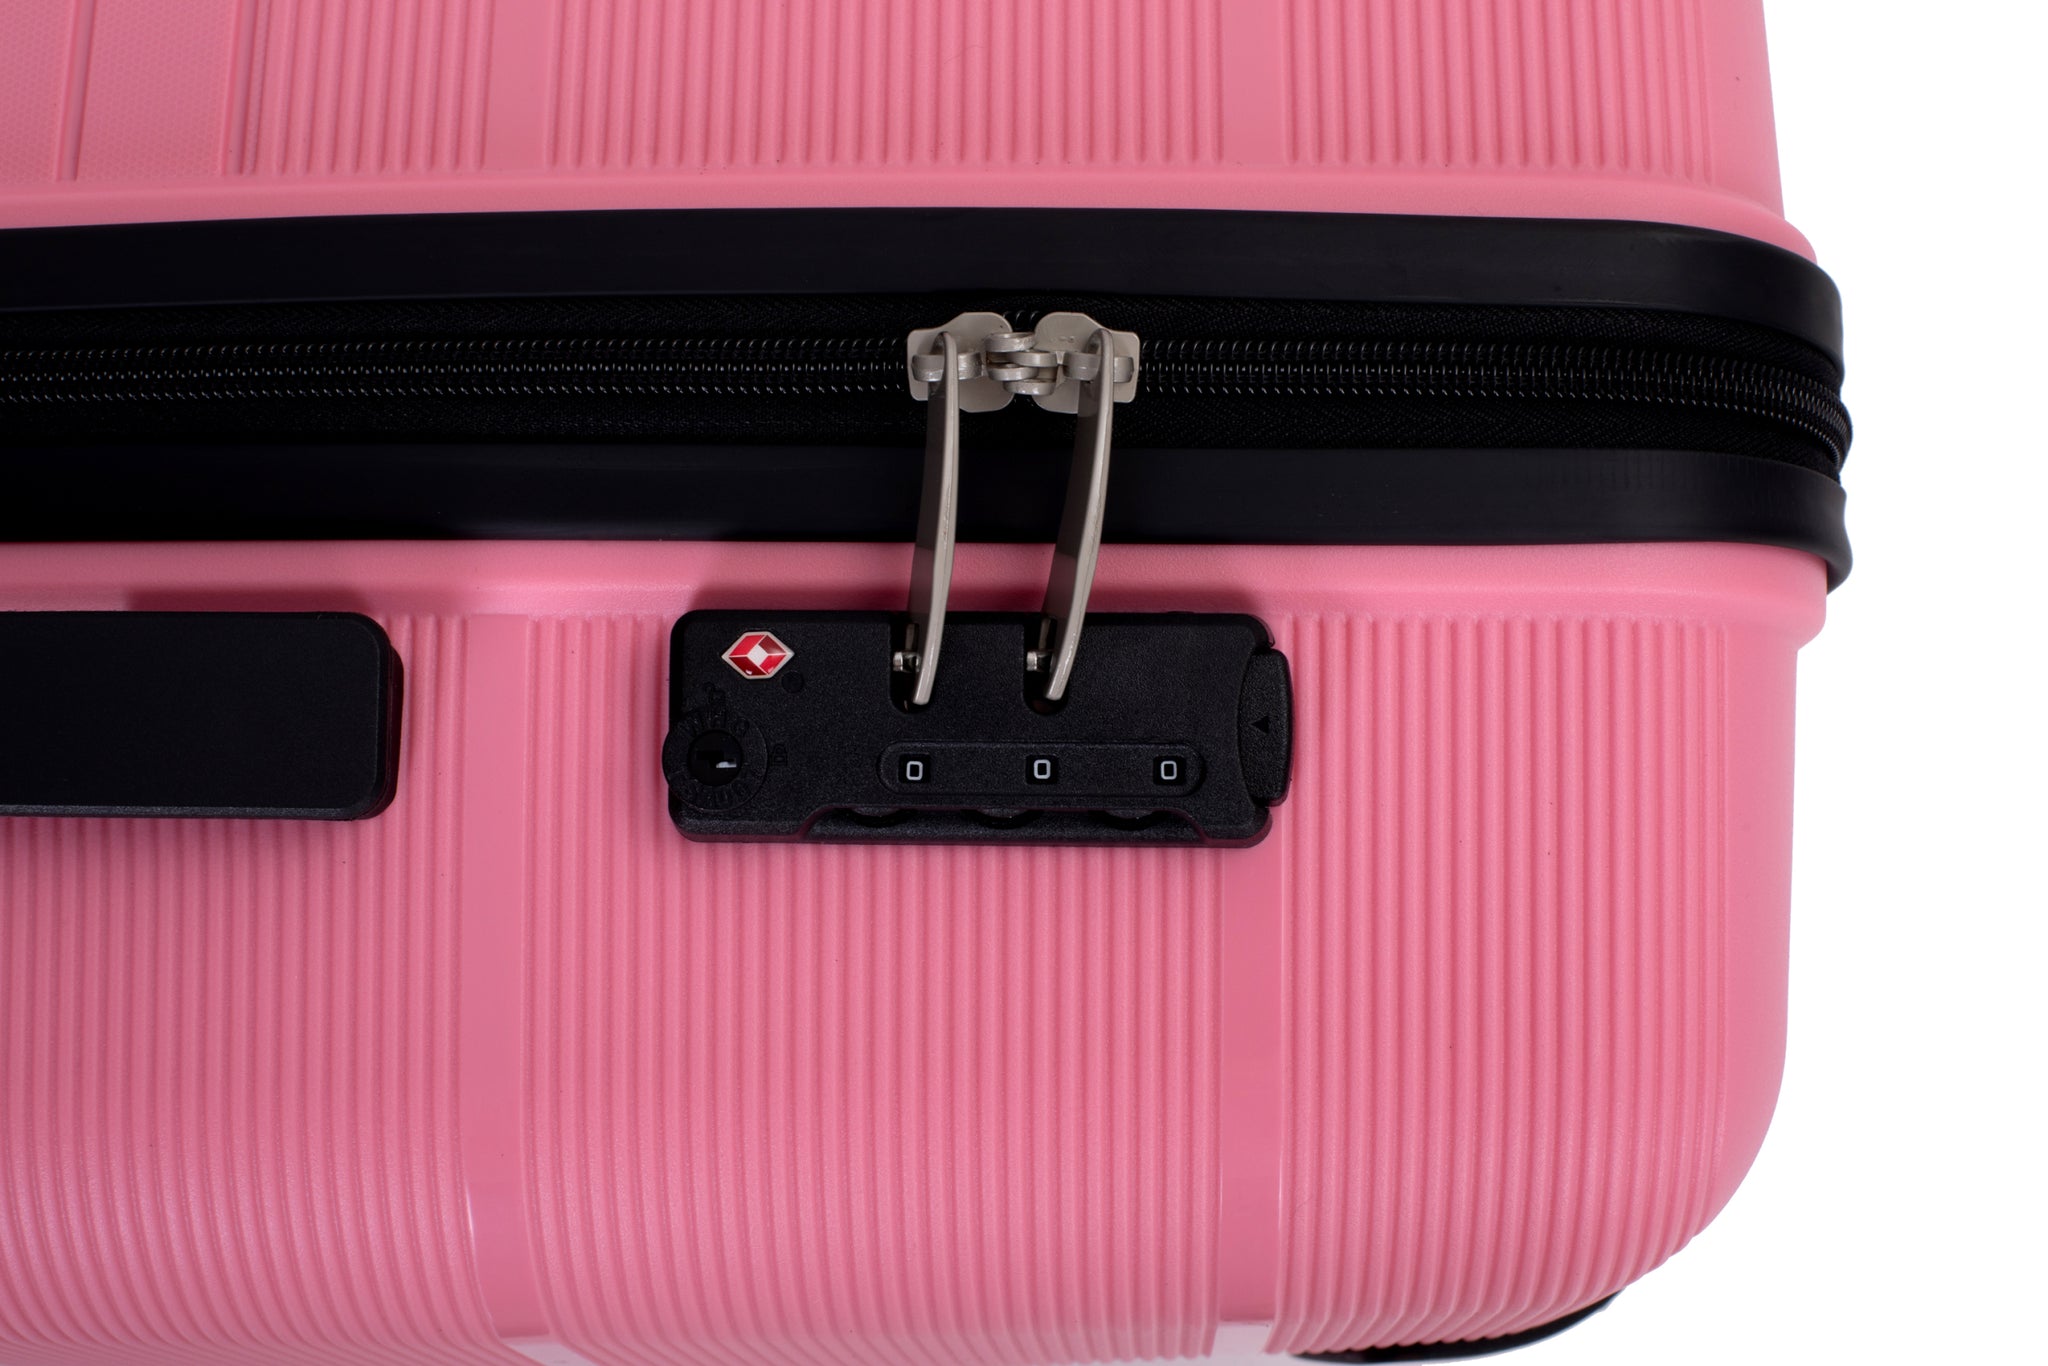 Hardshell Suitcase Double Spinner Wheels PP Luggage pink-polypropylene